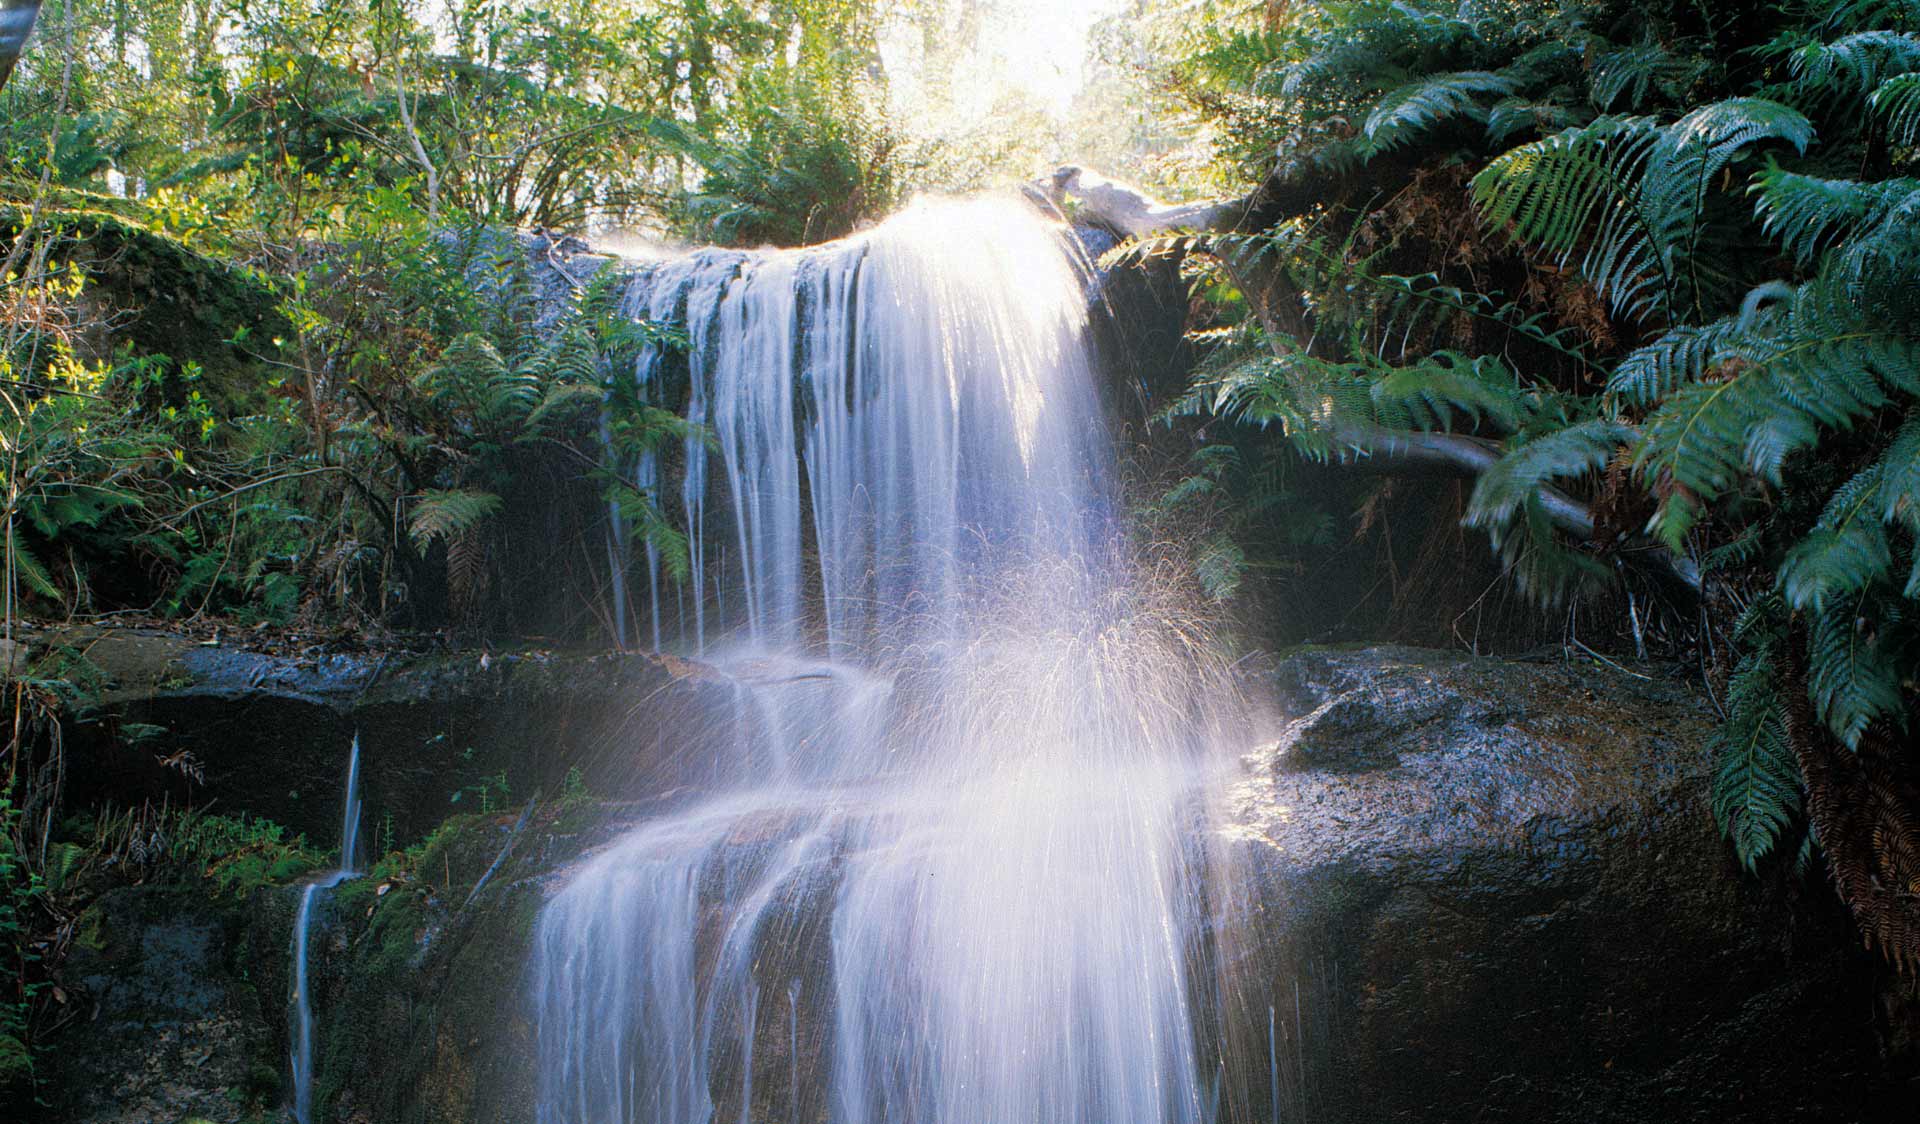 Water cascades down Fern Tree Falls in Mount Buangor State Park.